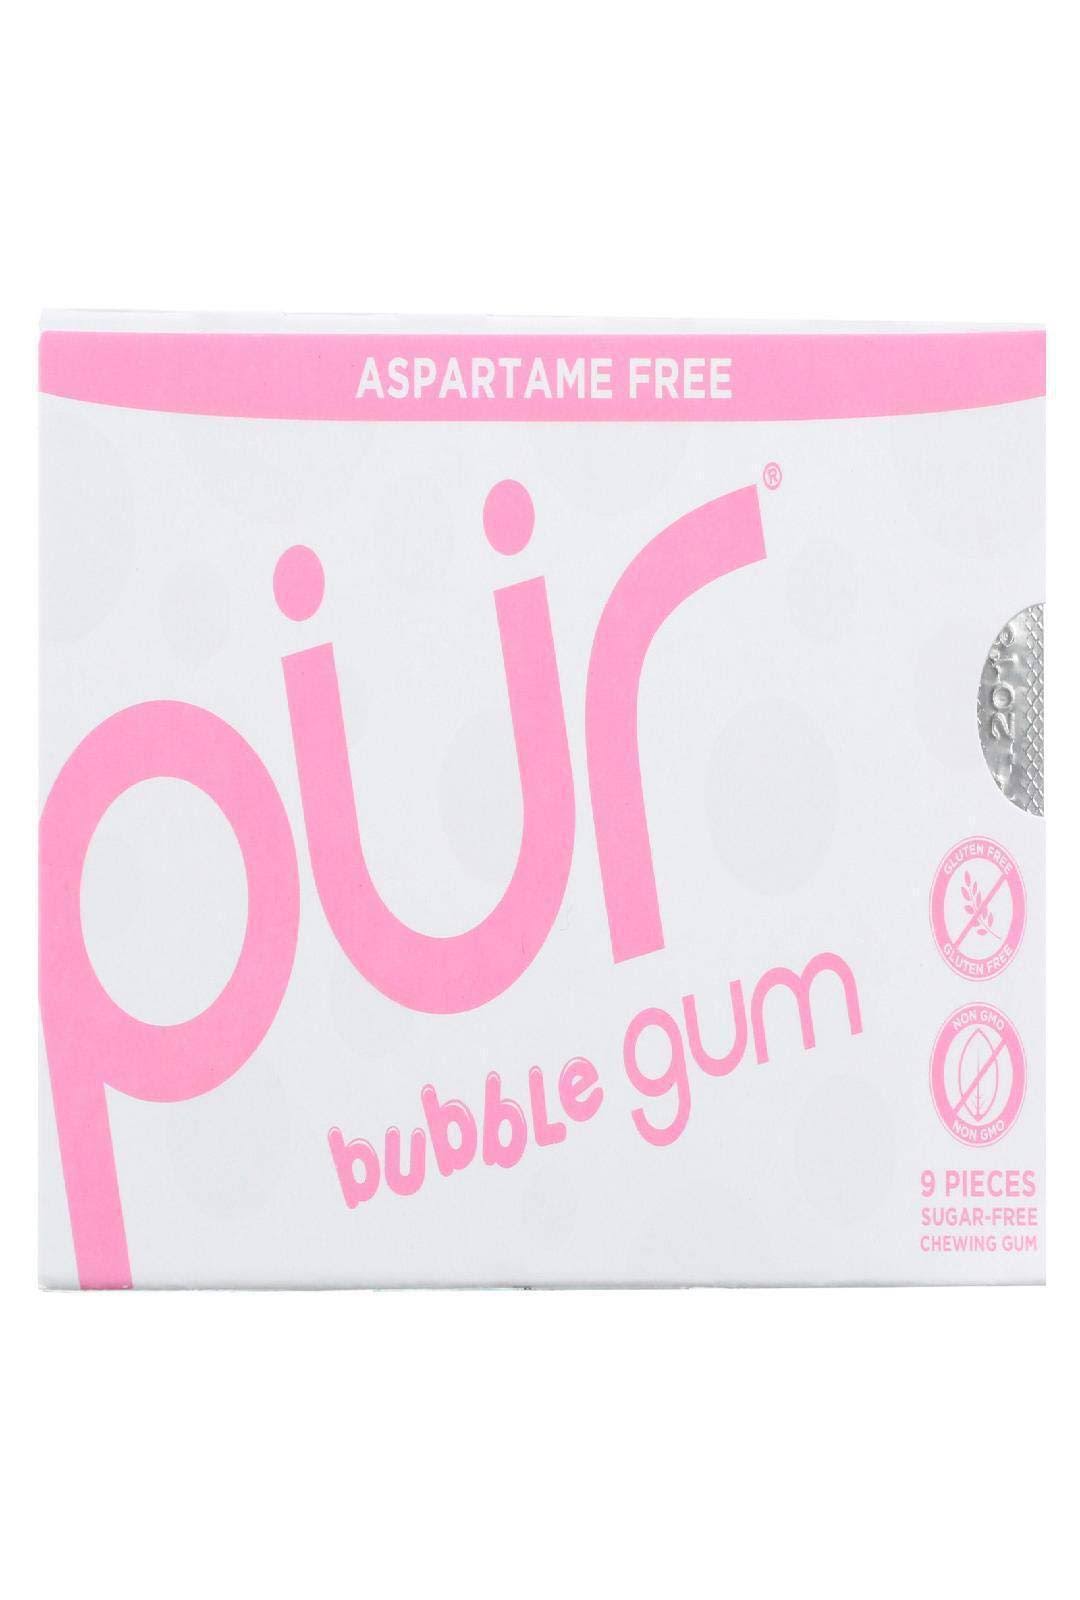 Pur Sugar Free Chewing Bubble Gum - 9pcs